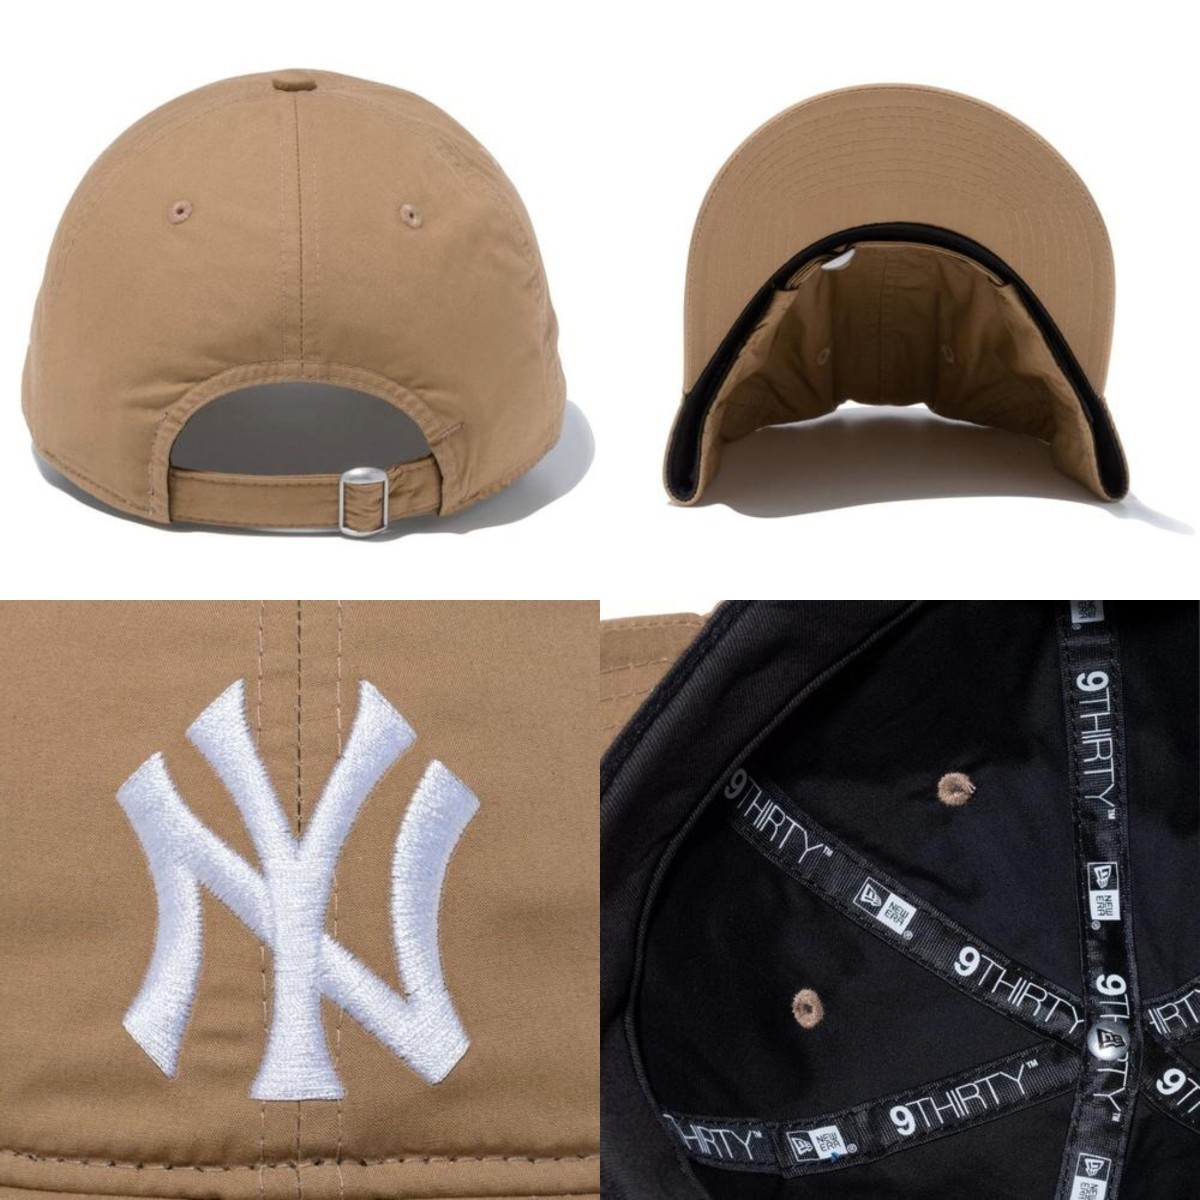  new goods unused New Era low cap beige 9twenty regular goods New York yan Keith NEW ERA Baseball cap khaki hat NY